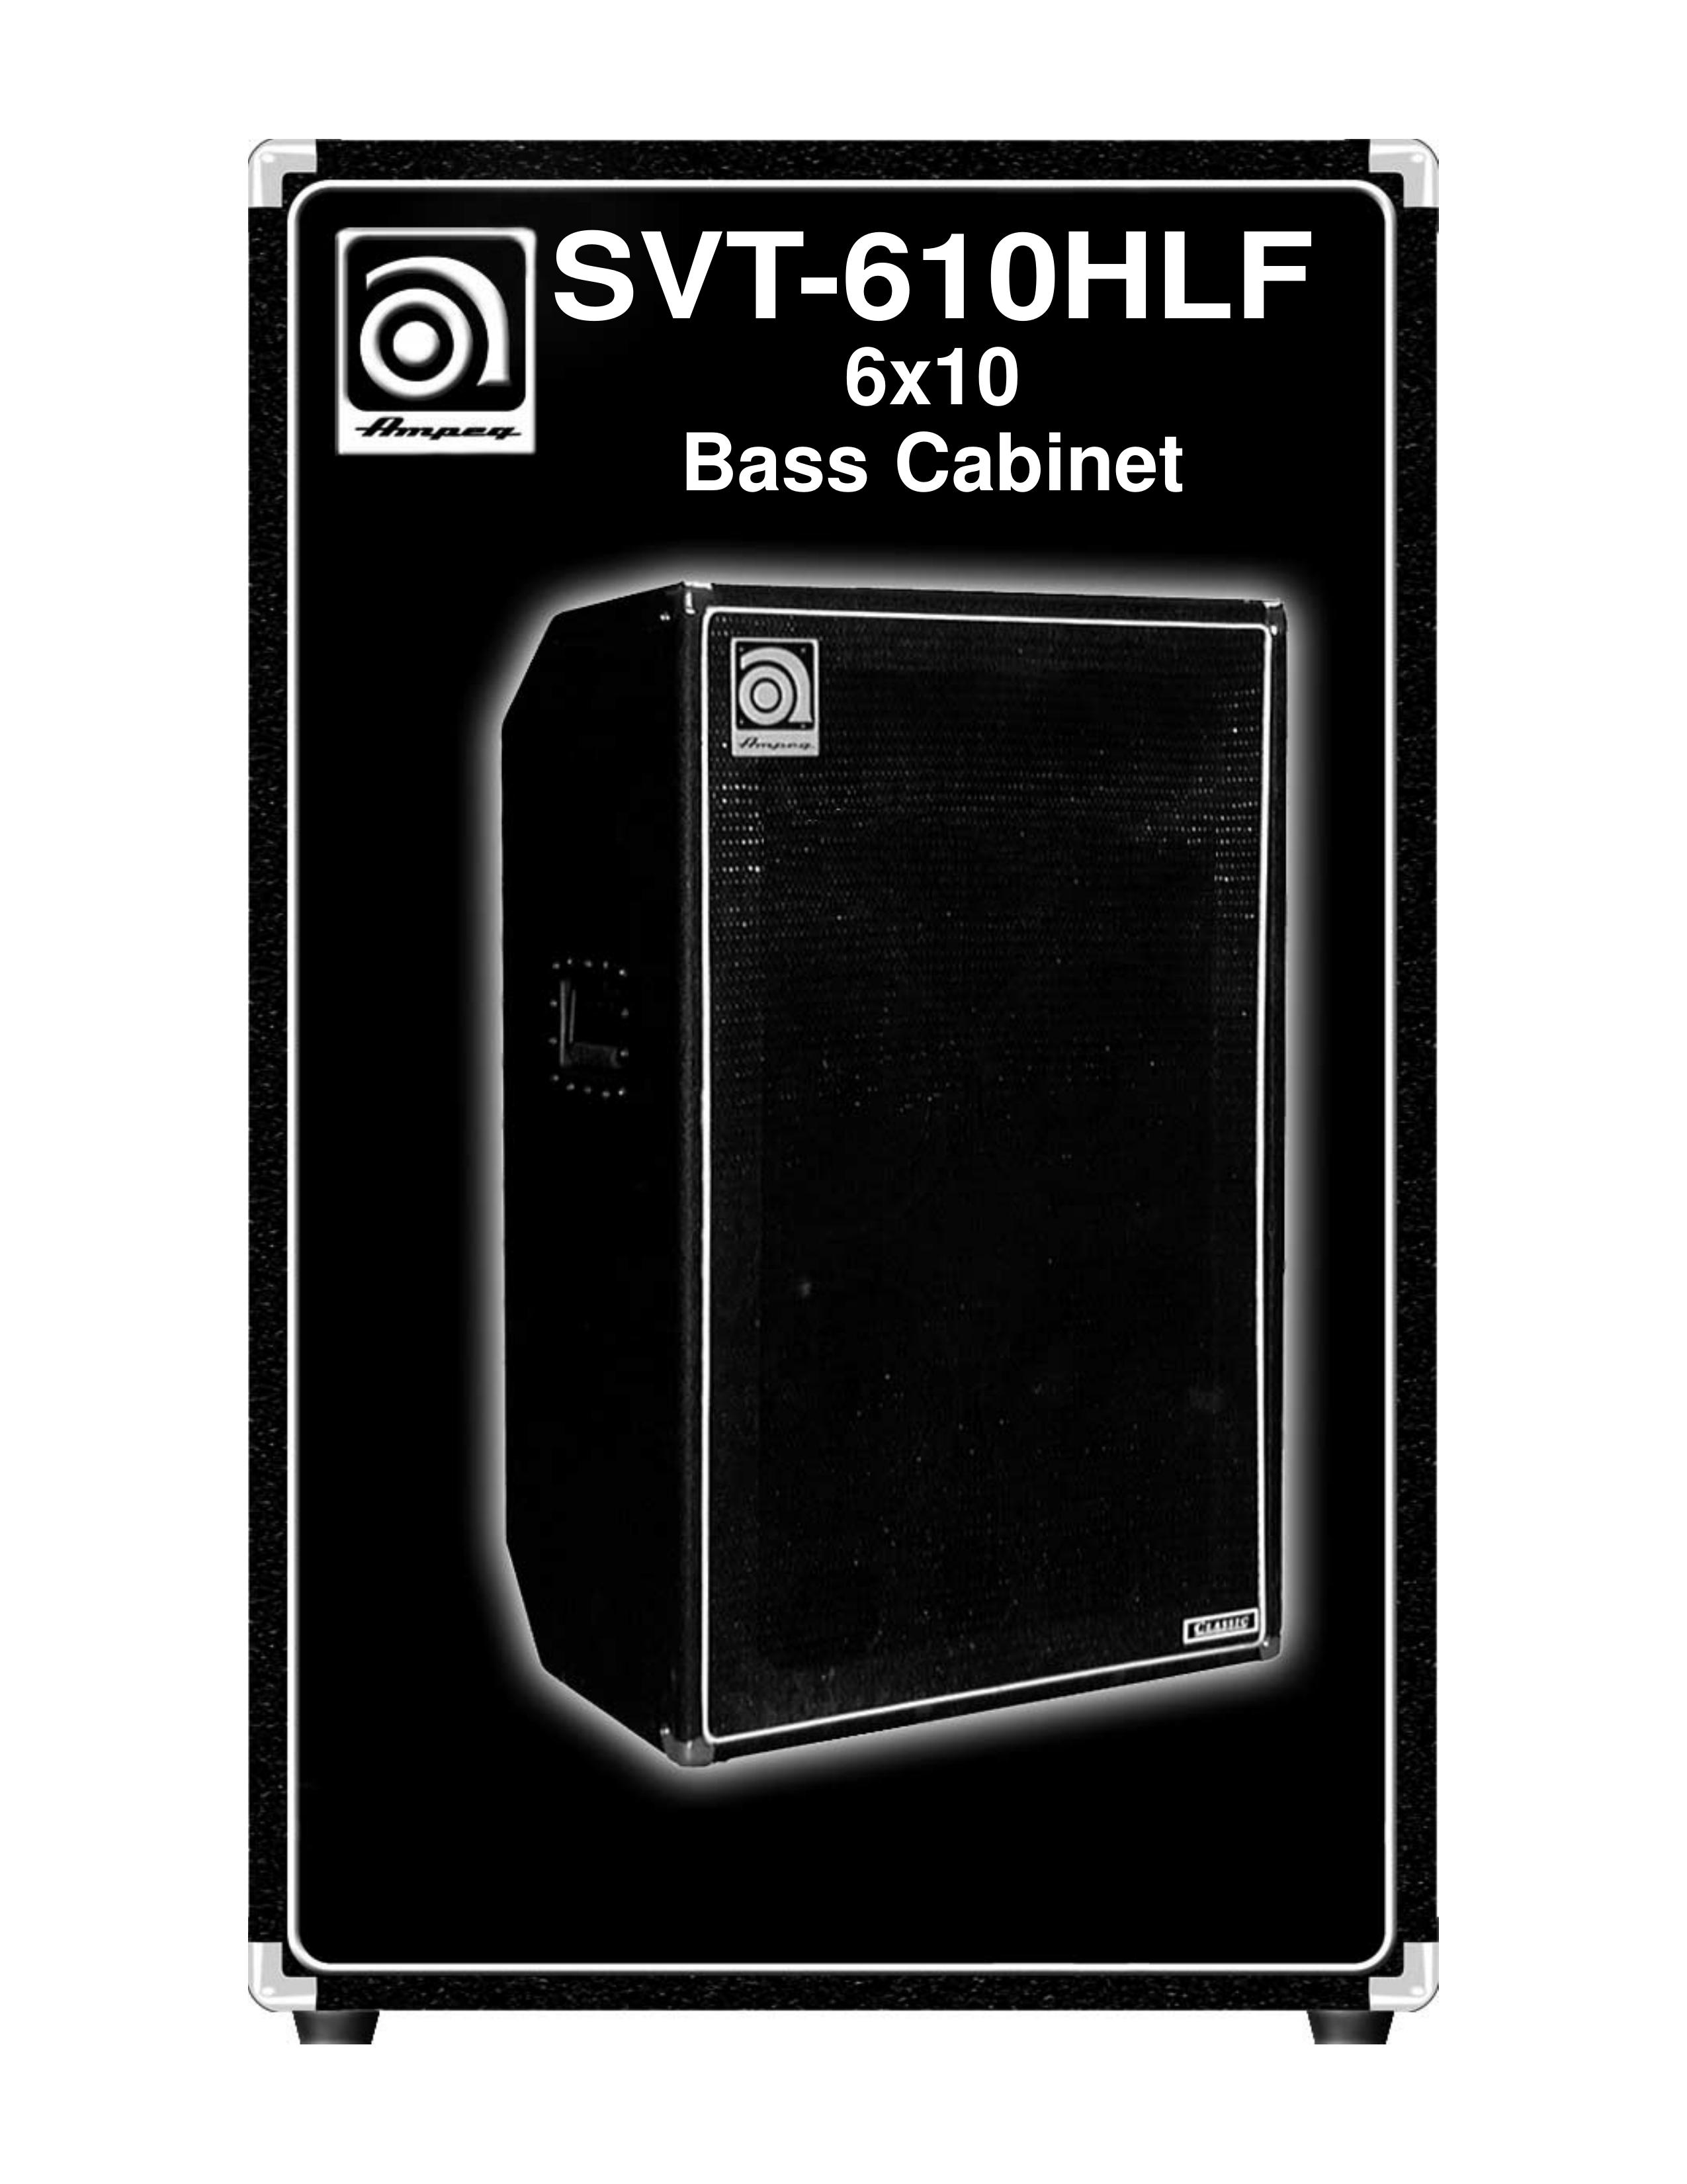 Ampeg SVT-610HLF Musical Instrument Amplifier User Manual